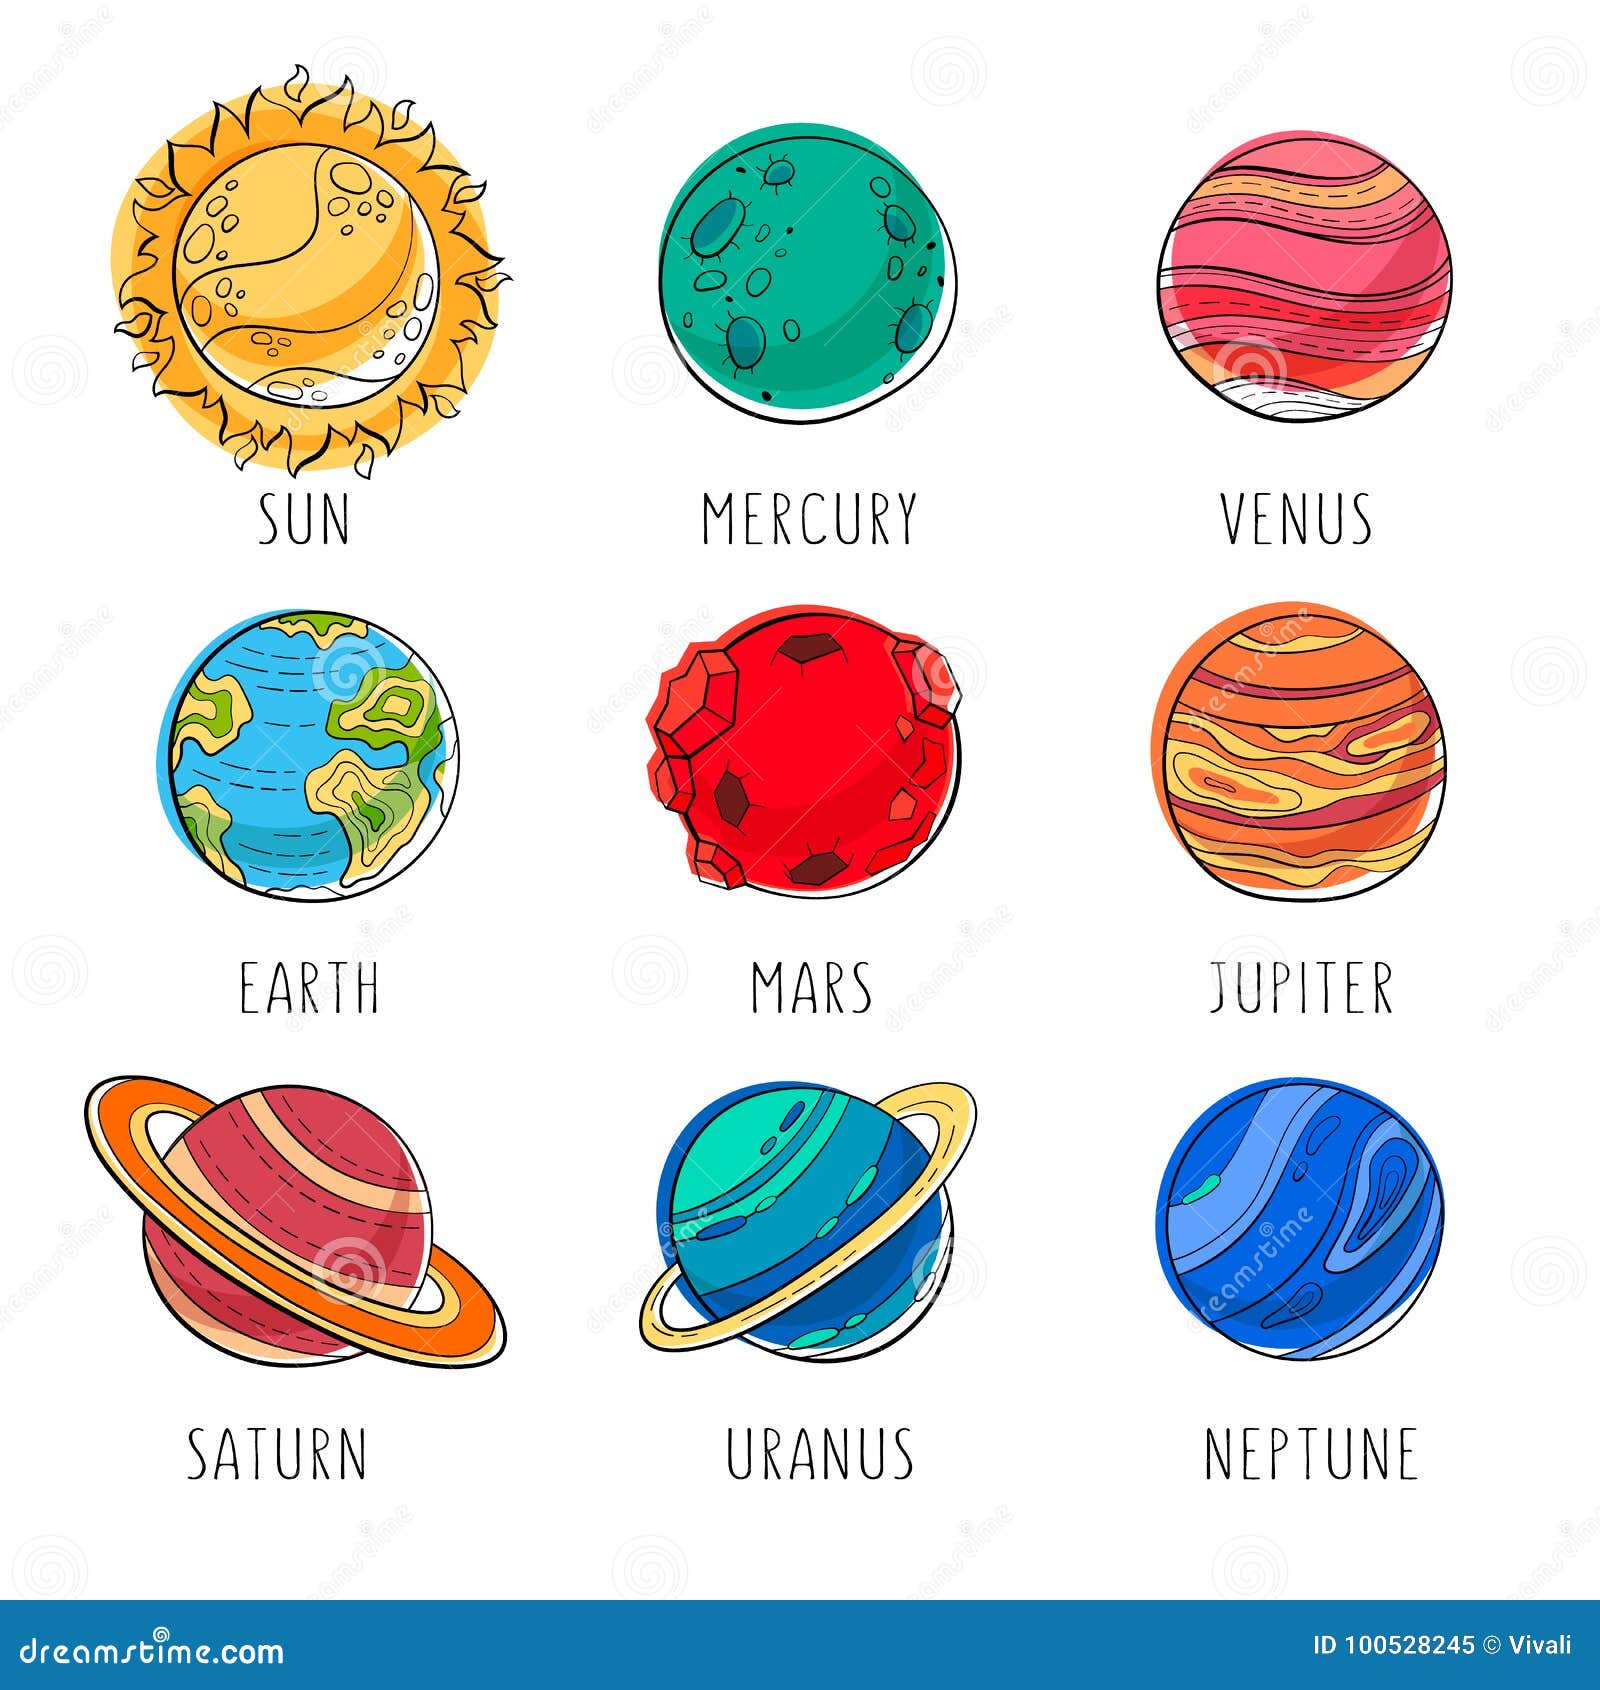 Neptune mythology of planet names sticker